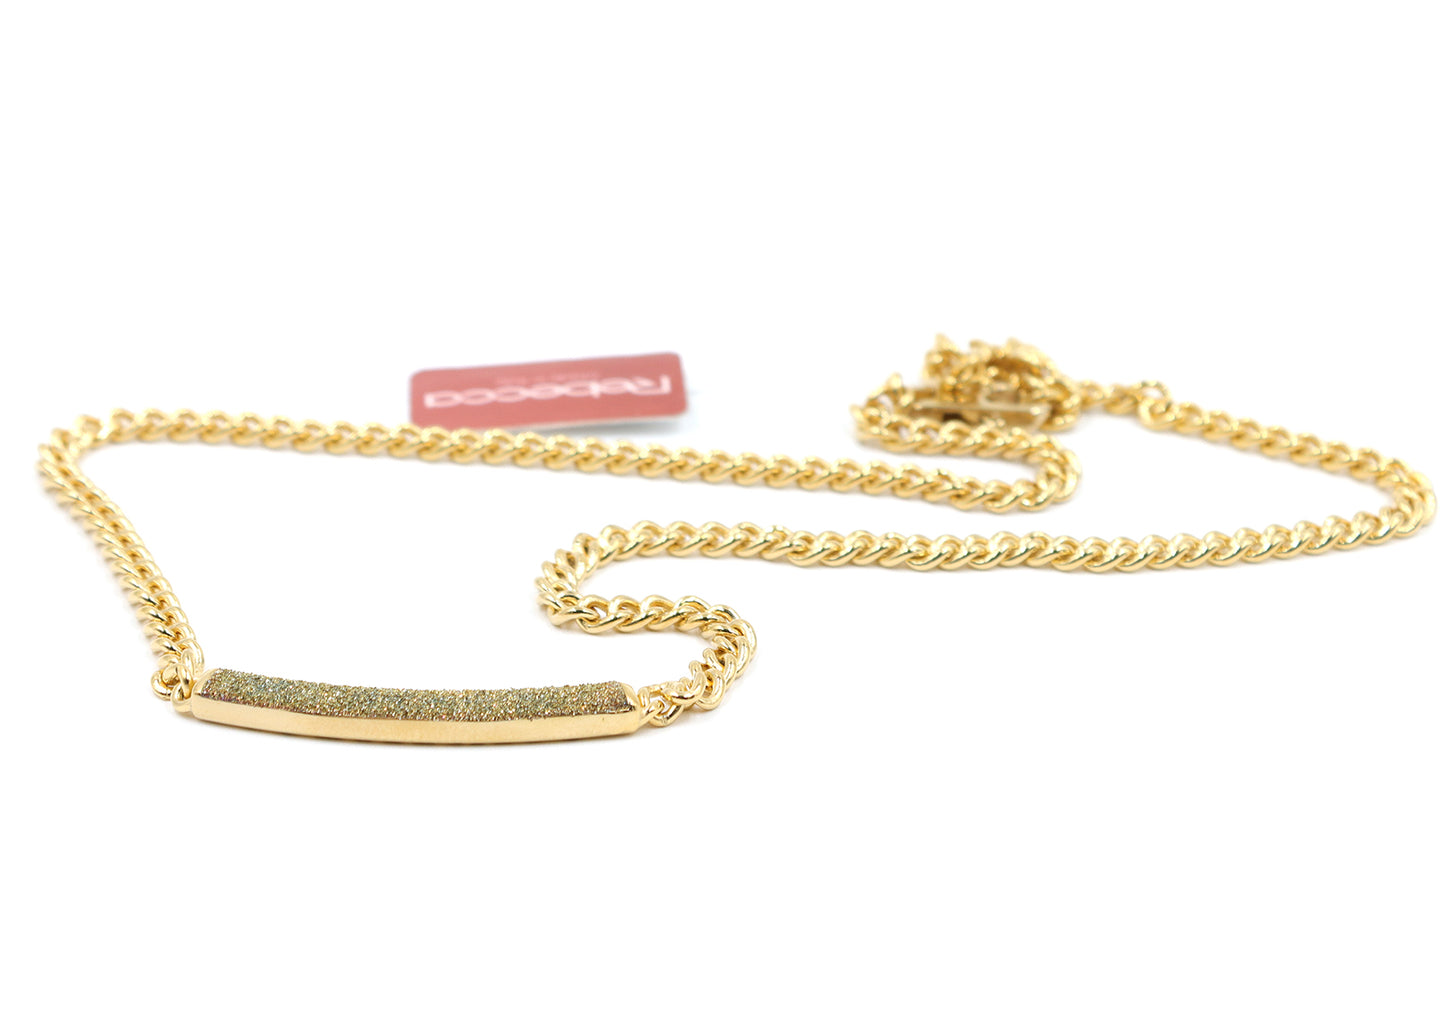 Yellow Gold Diamond Dust Bar Necklace